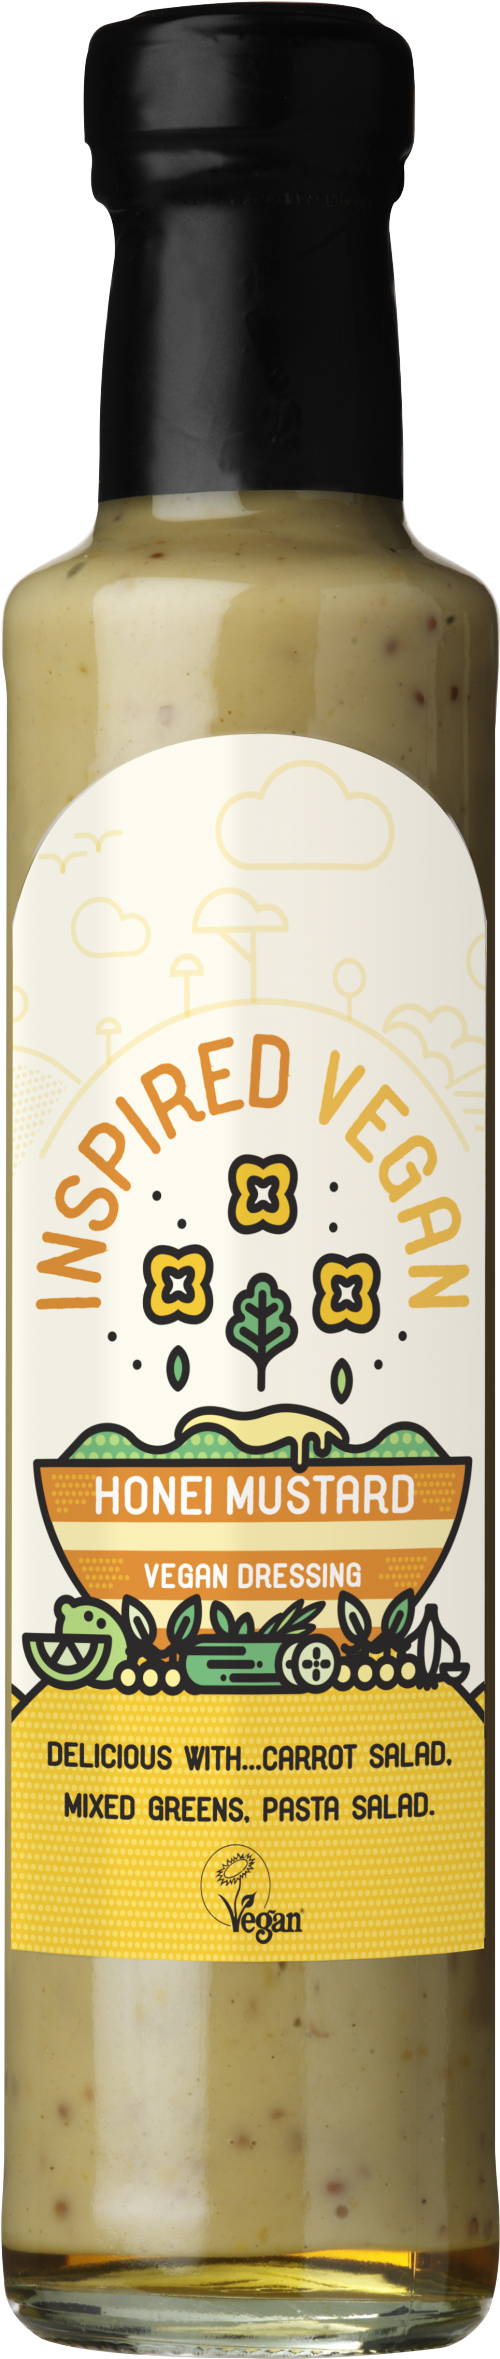 ATKINS & POTTS Inspired Vegan Honei Mustard Dressing 265g